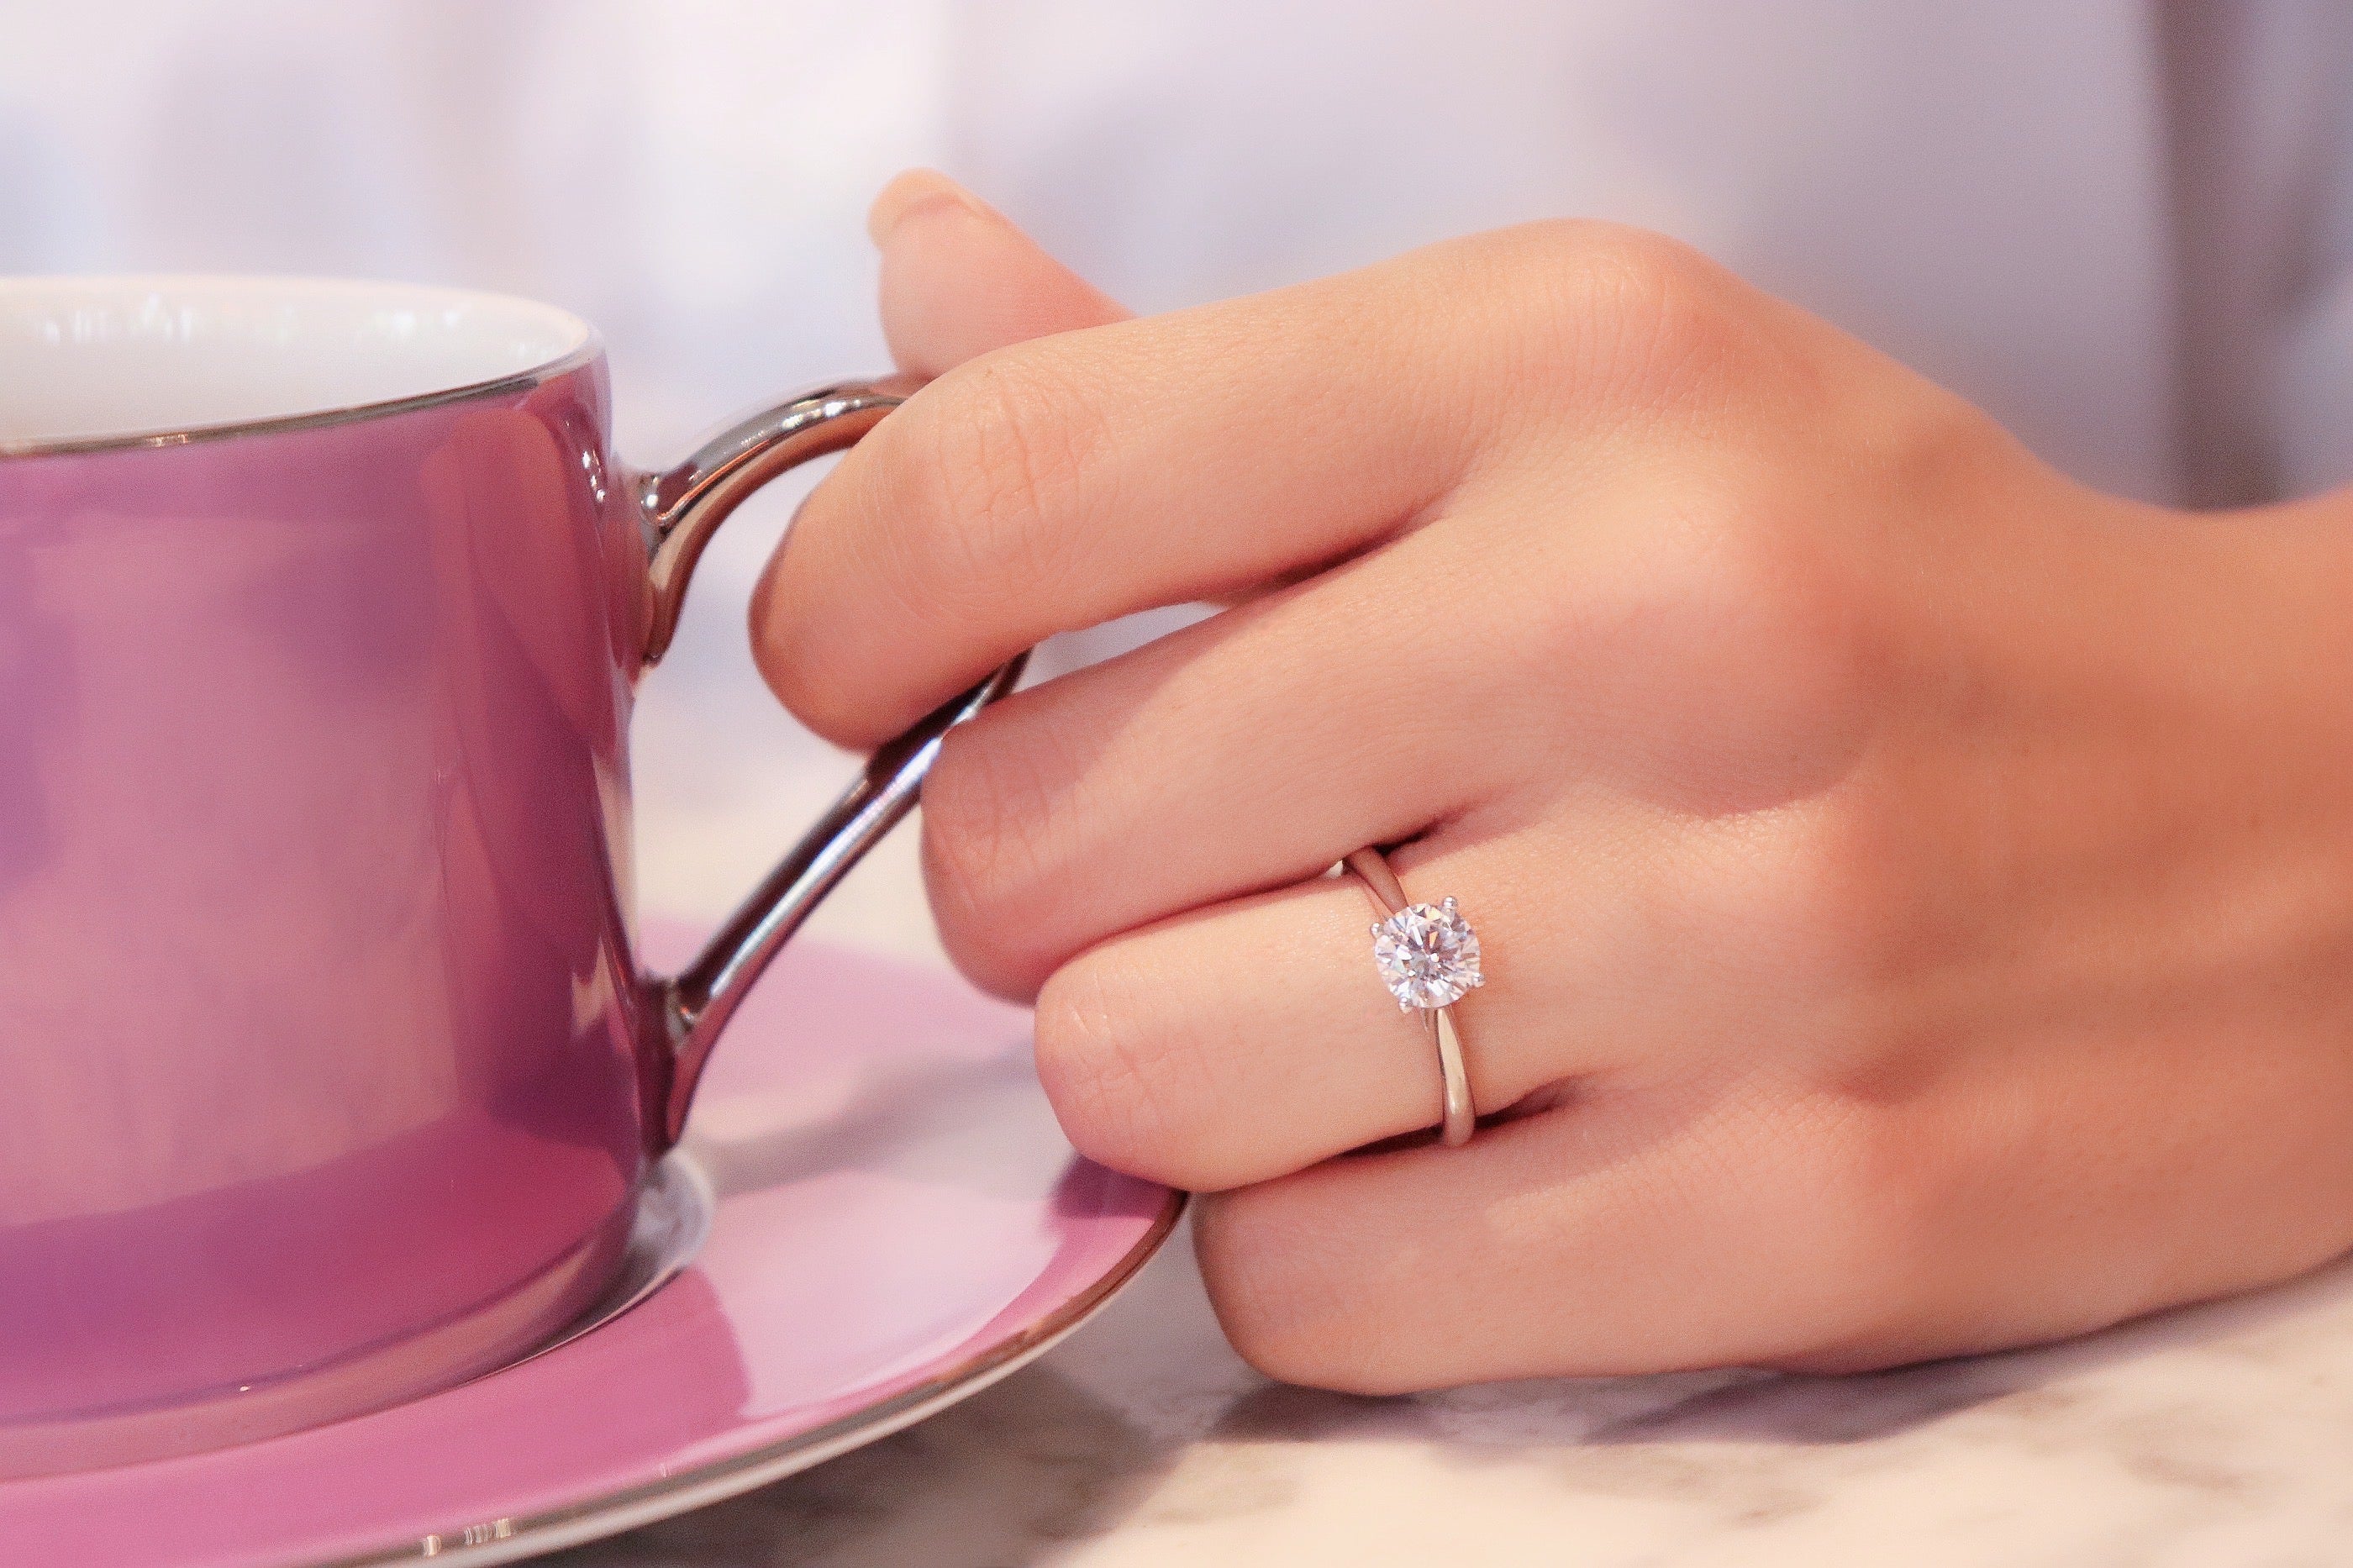 1 carat | N°1 (Solitaire Ring) | Lab Grown Diamond Engagement Ring